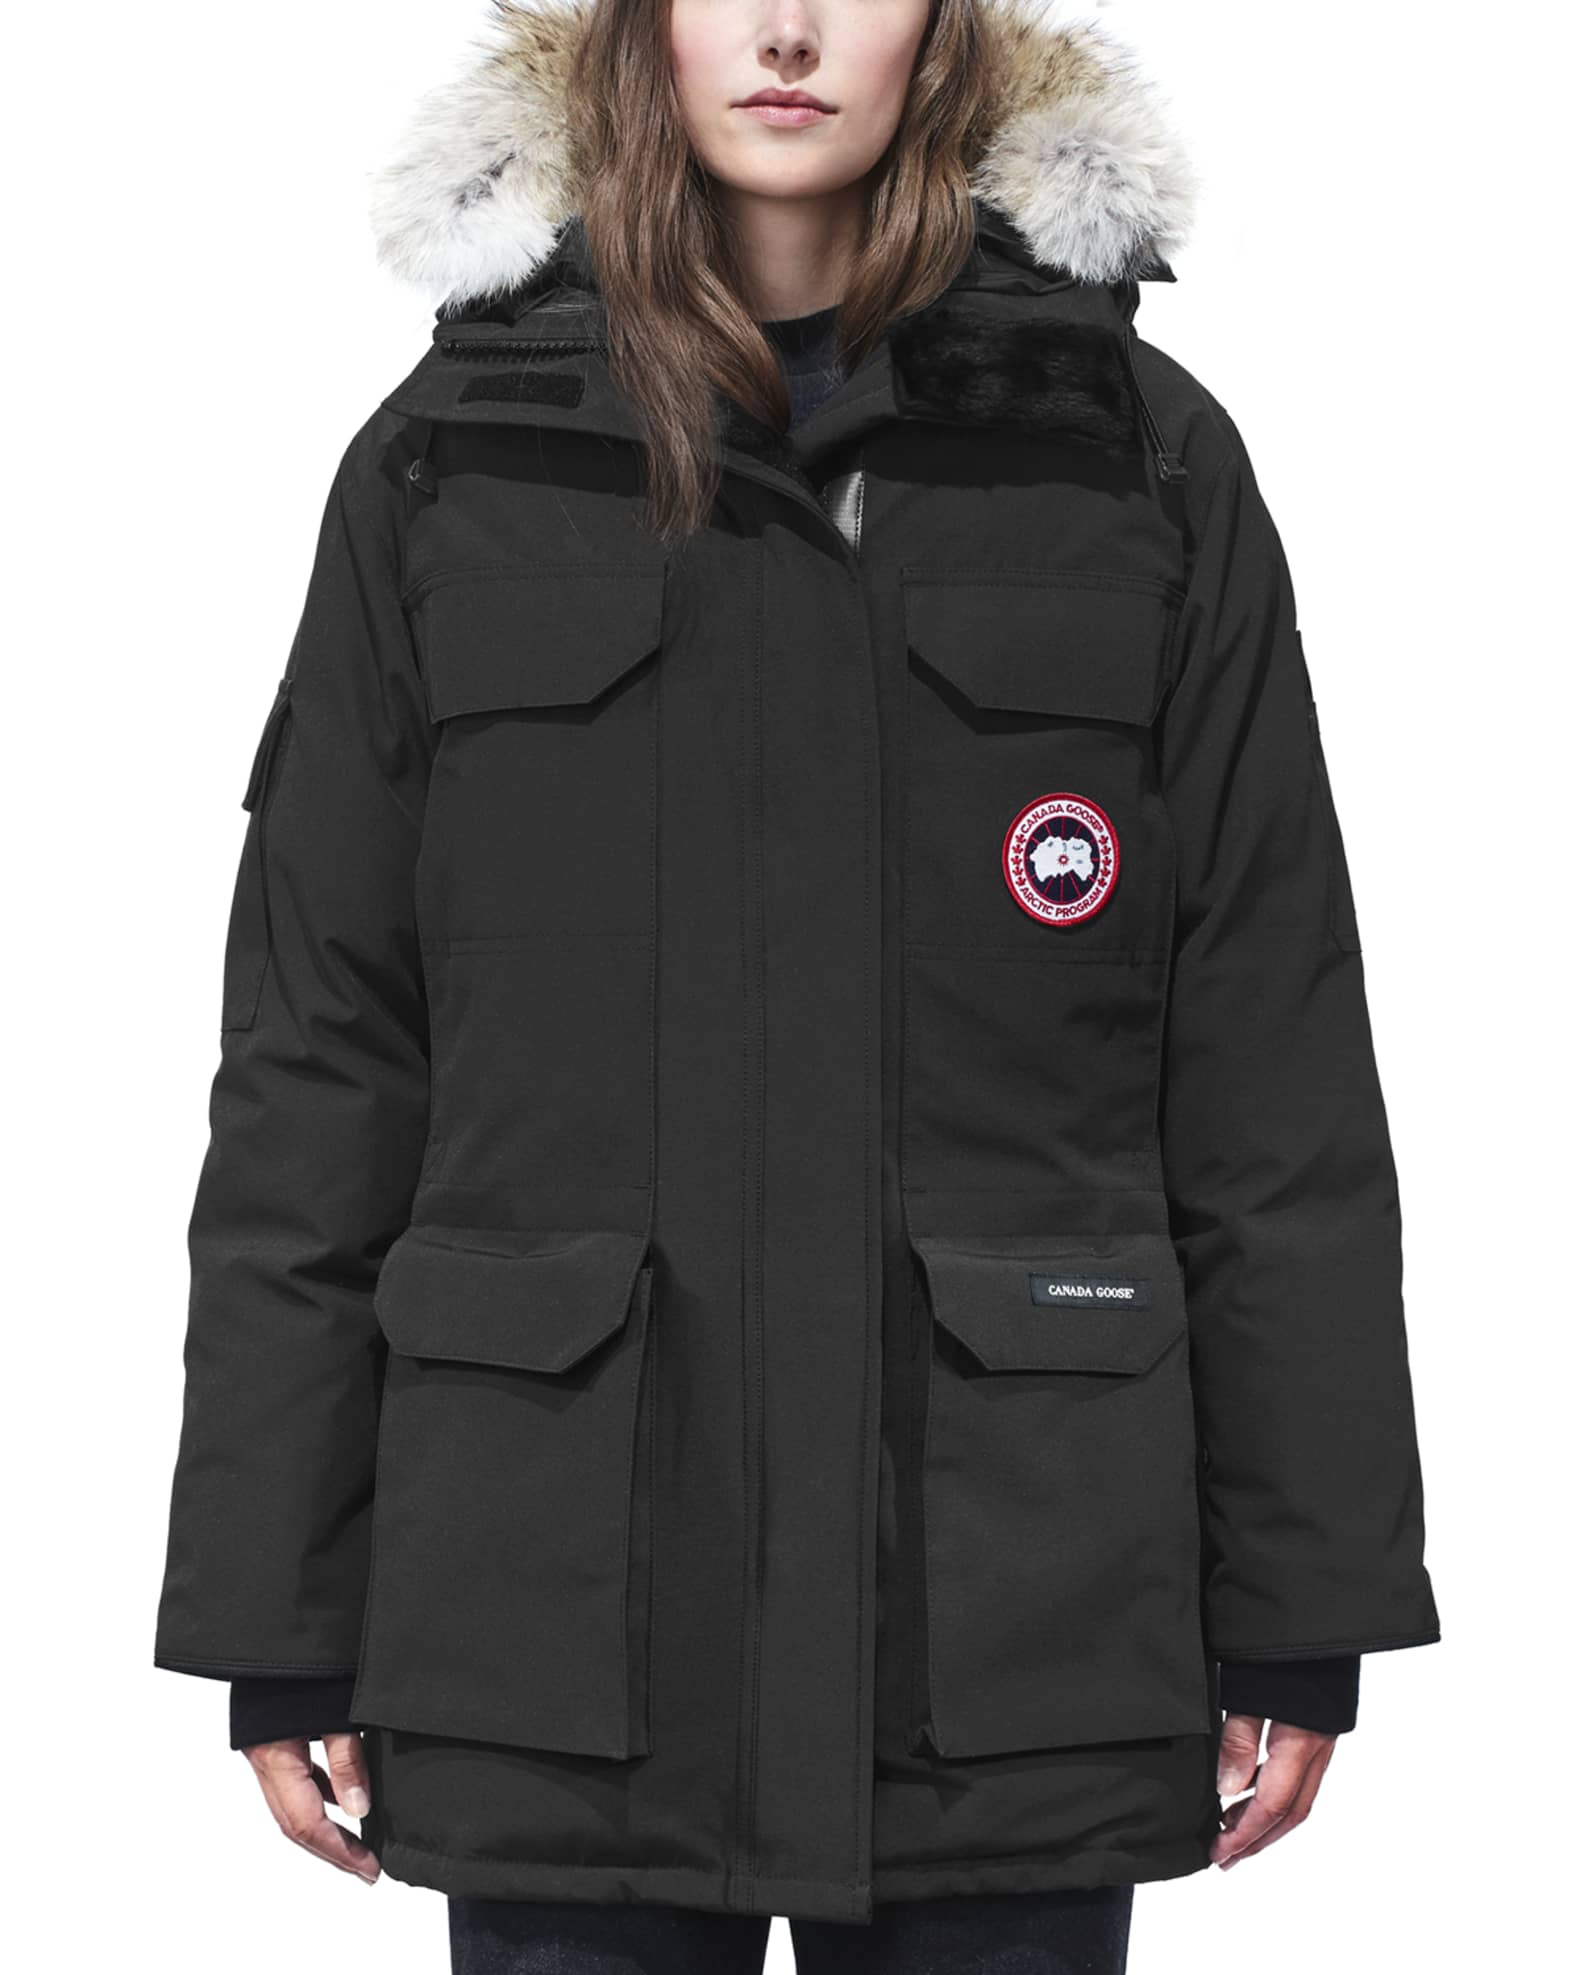 Canada Goose Expedition Multi Pocket Parka Coat W Fur Hood Neiman Marcus